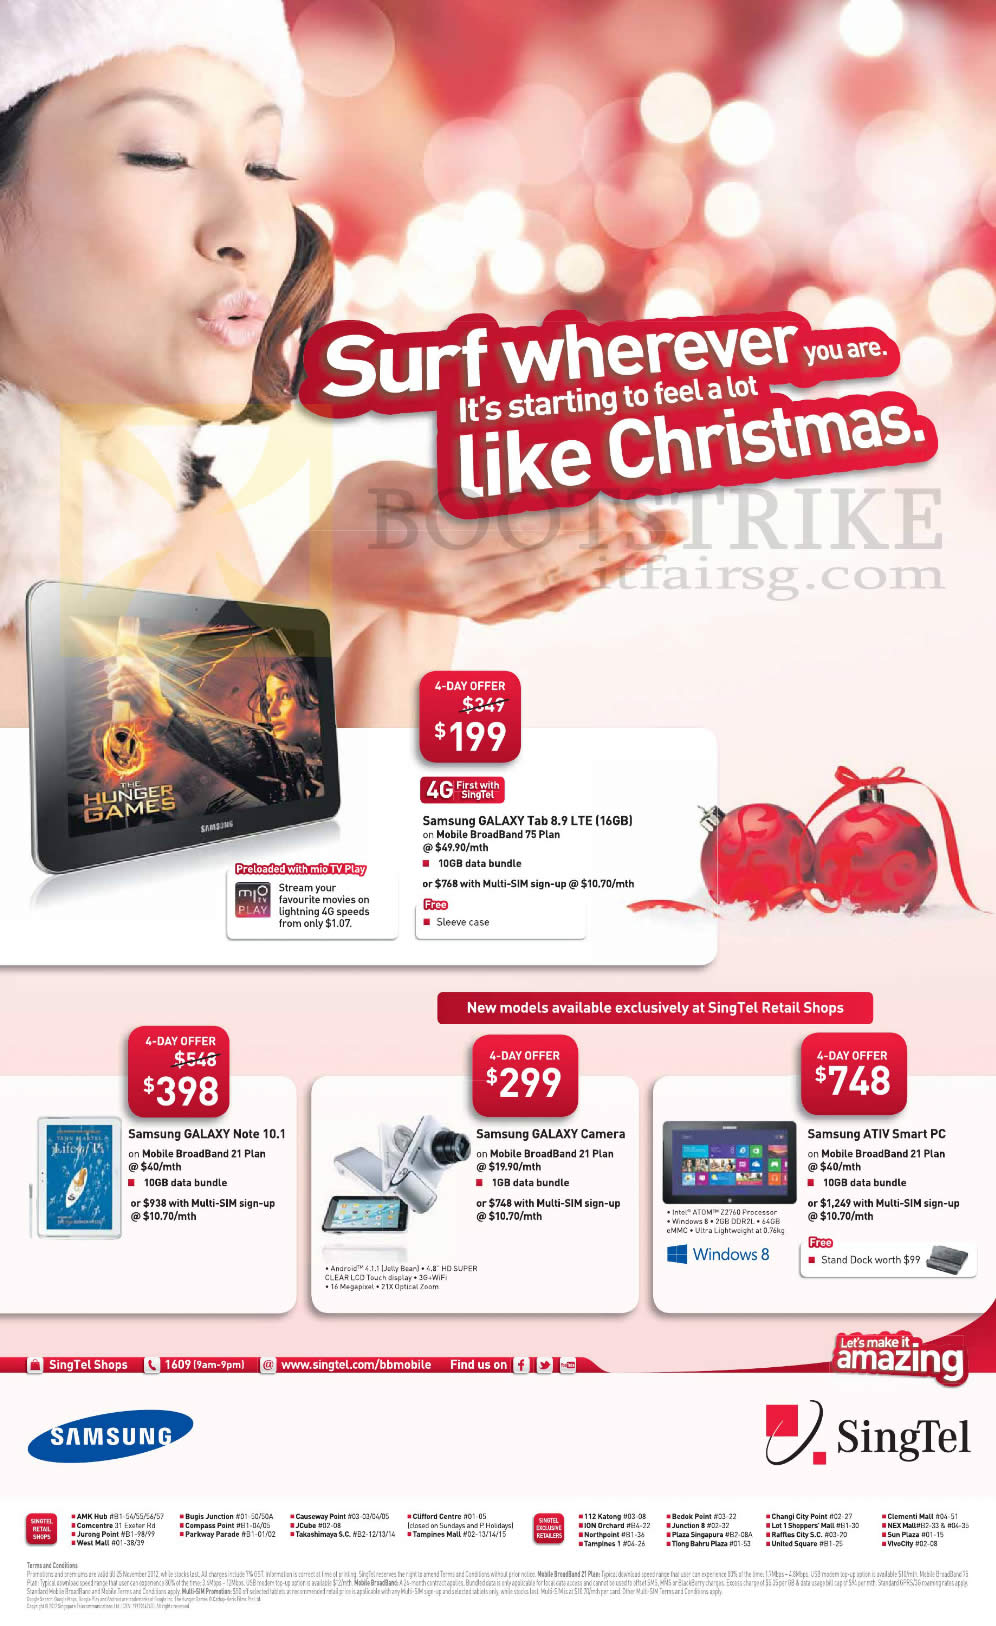 SITEX 2012 price list image brochure of Singtel Tablets Samsung Galaxy Tab 8.9 LTE, Note 10.1, Galaxy Camera, ATIV Smart PC